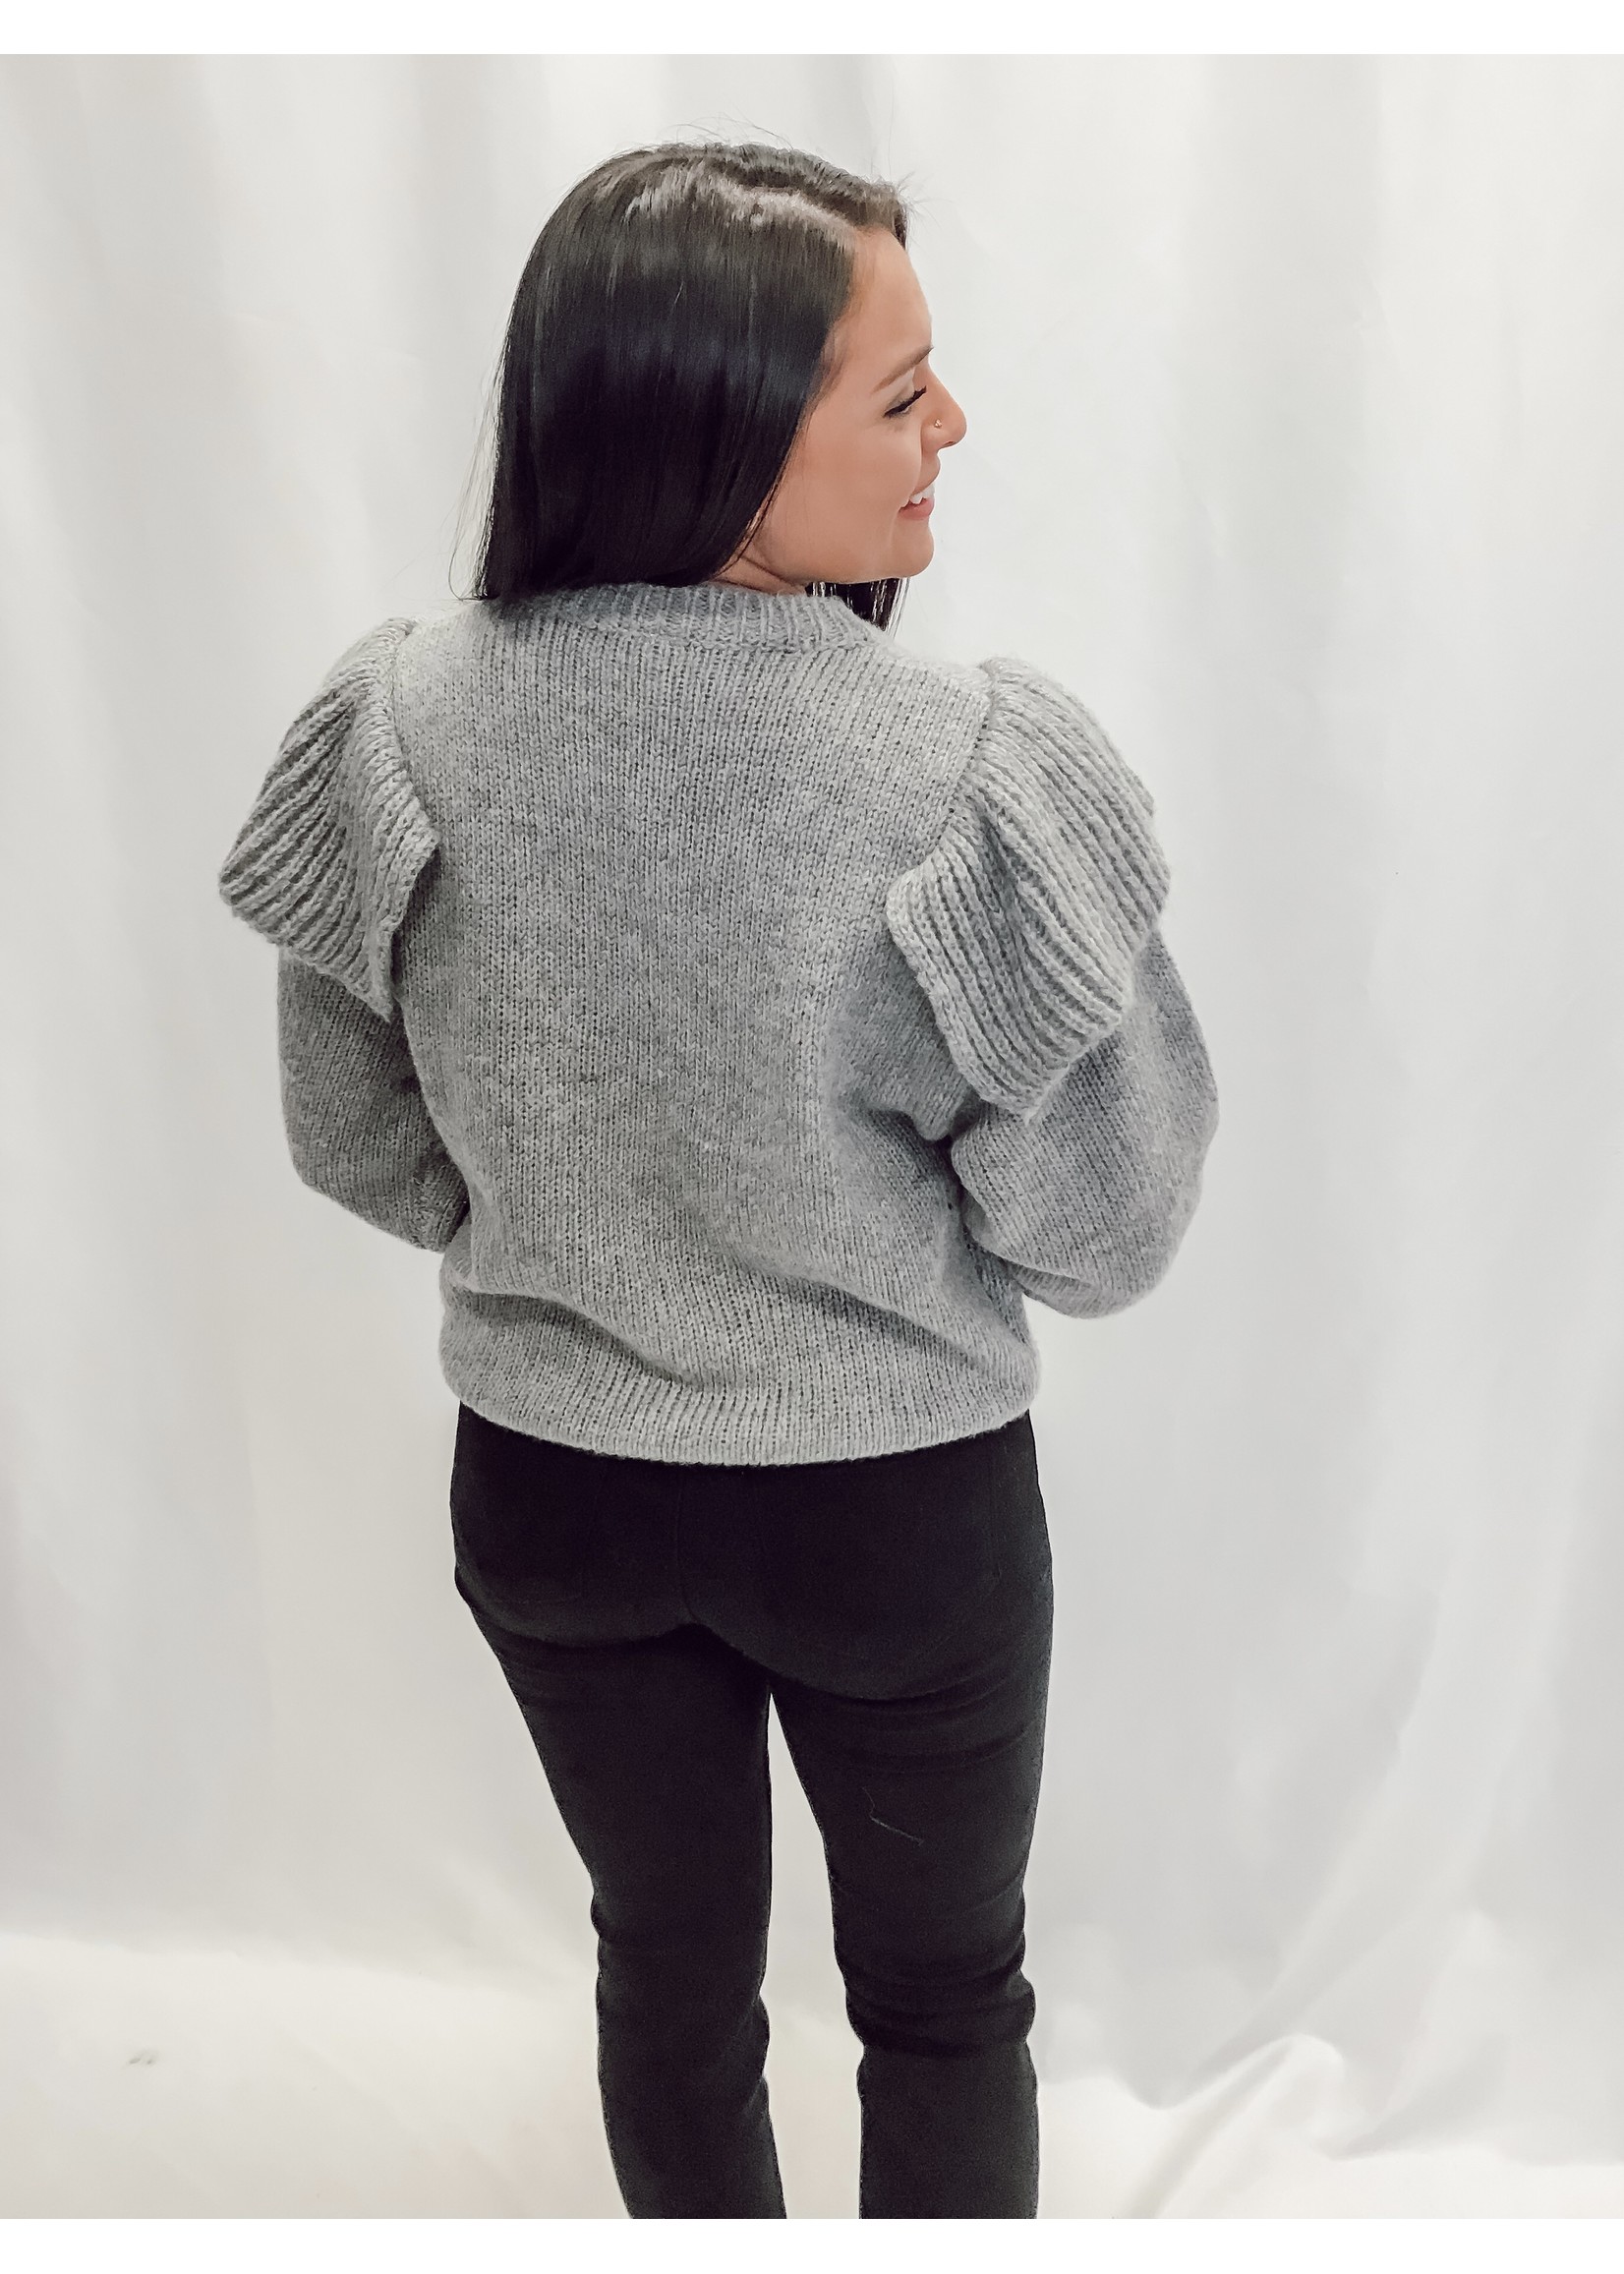 The Lilliana Ruffled Sweater